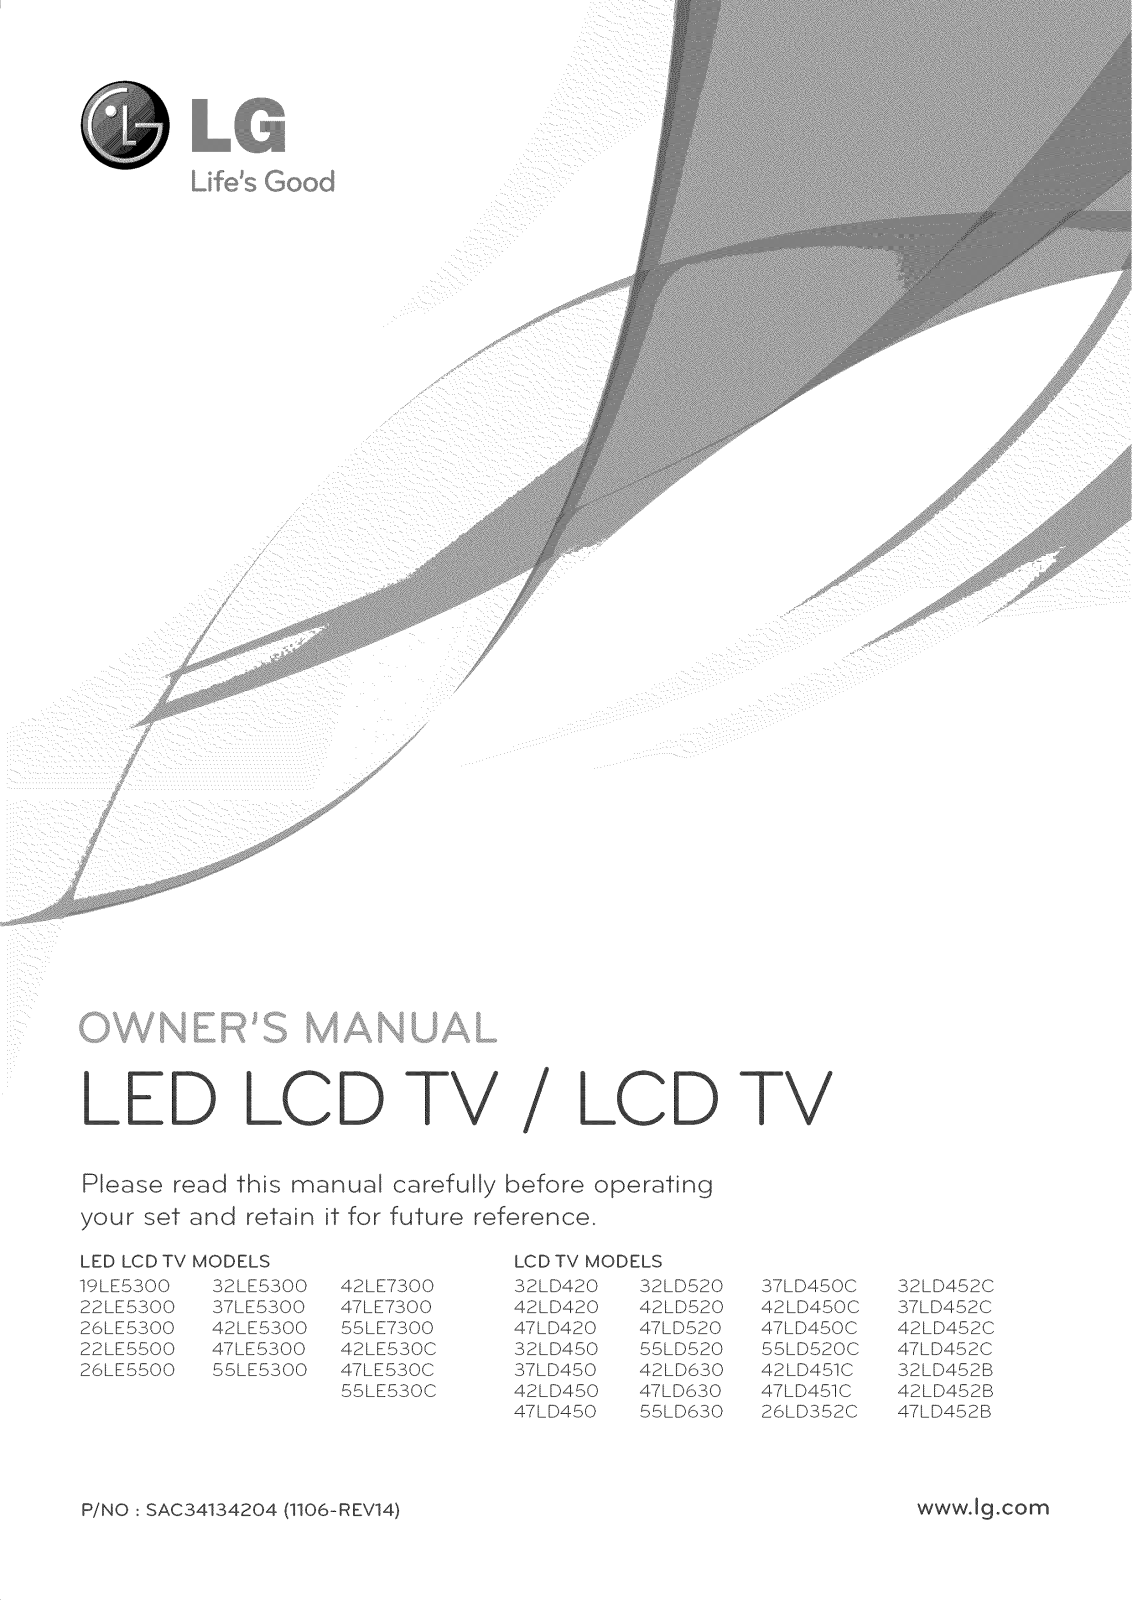 LG 47LD520, 47LD450C, 47LD450, 42LD520, 42LD450C Owner’s Manual